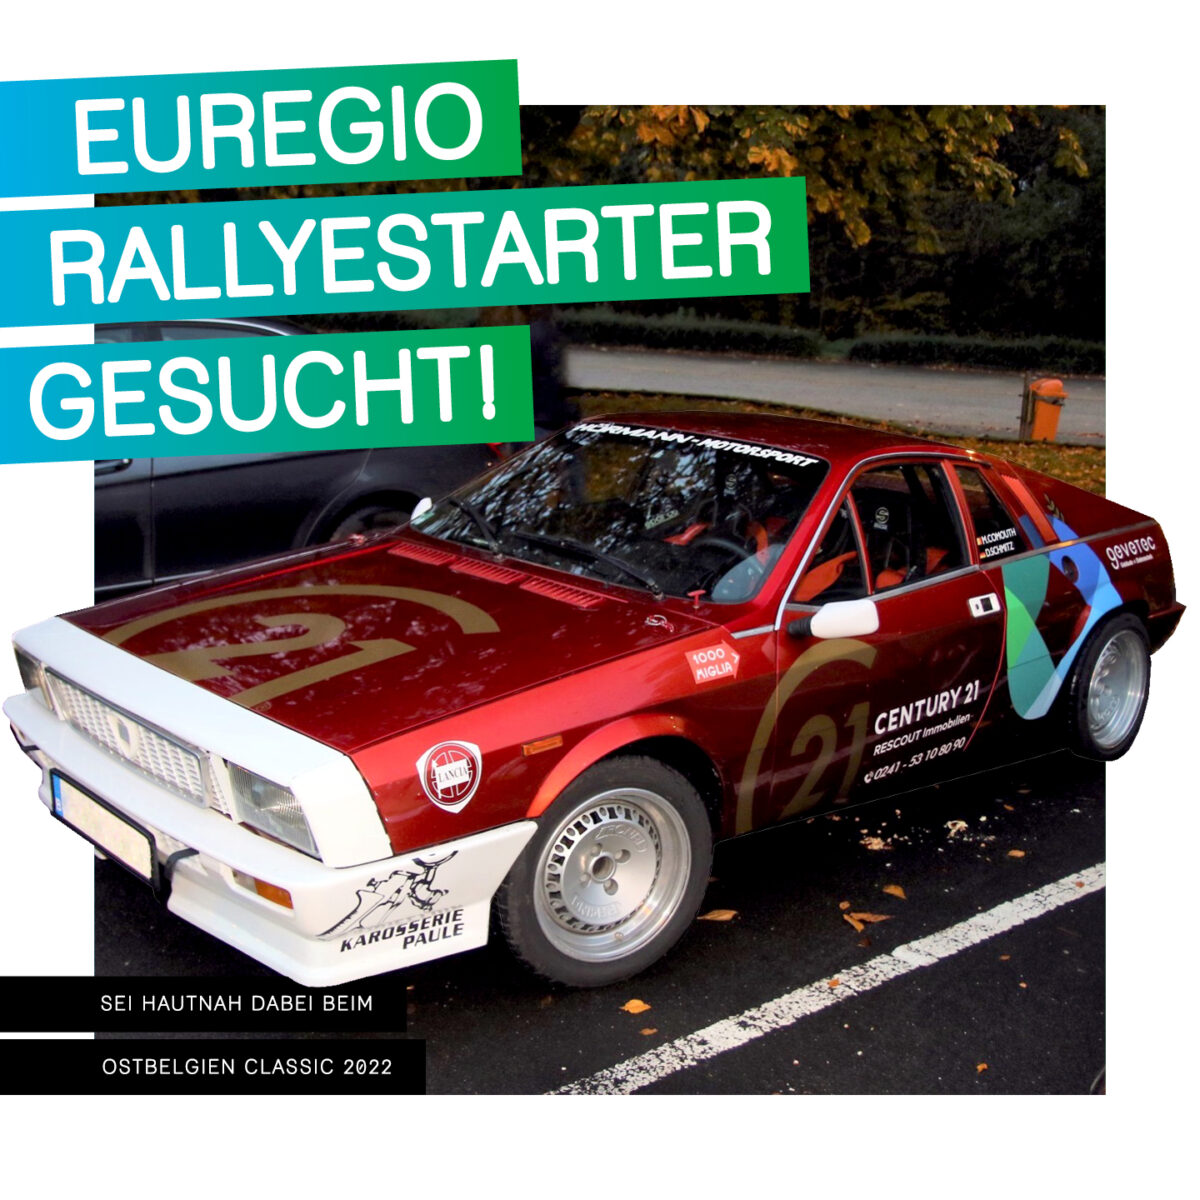 Euregio Rallystarter gesucht